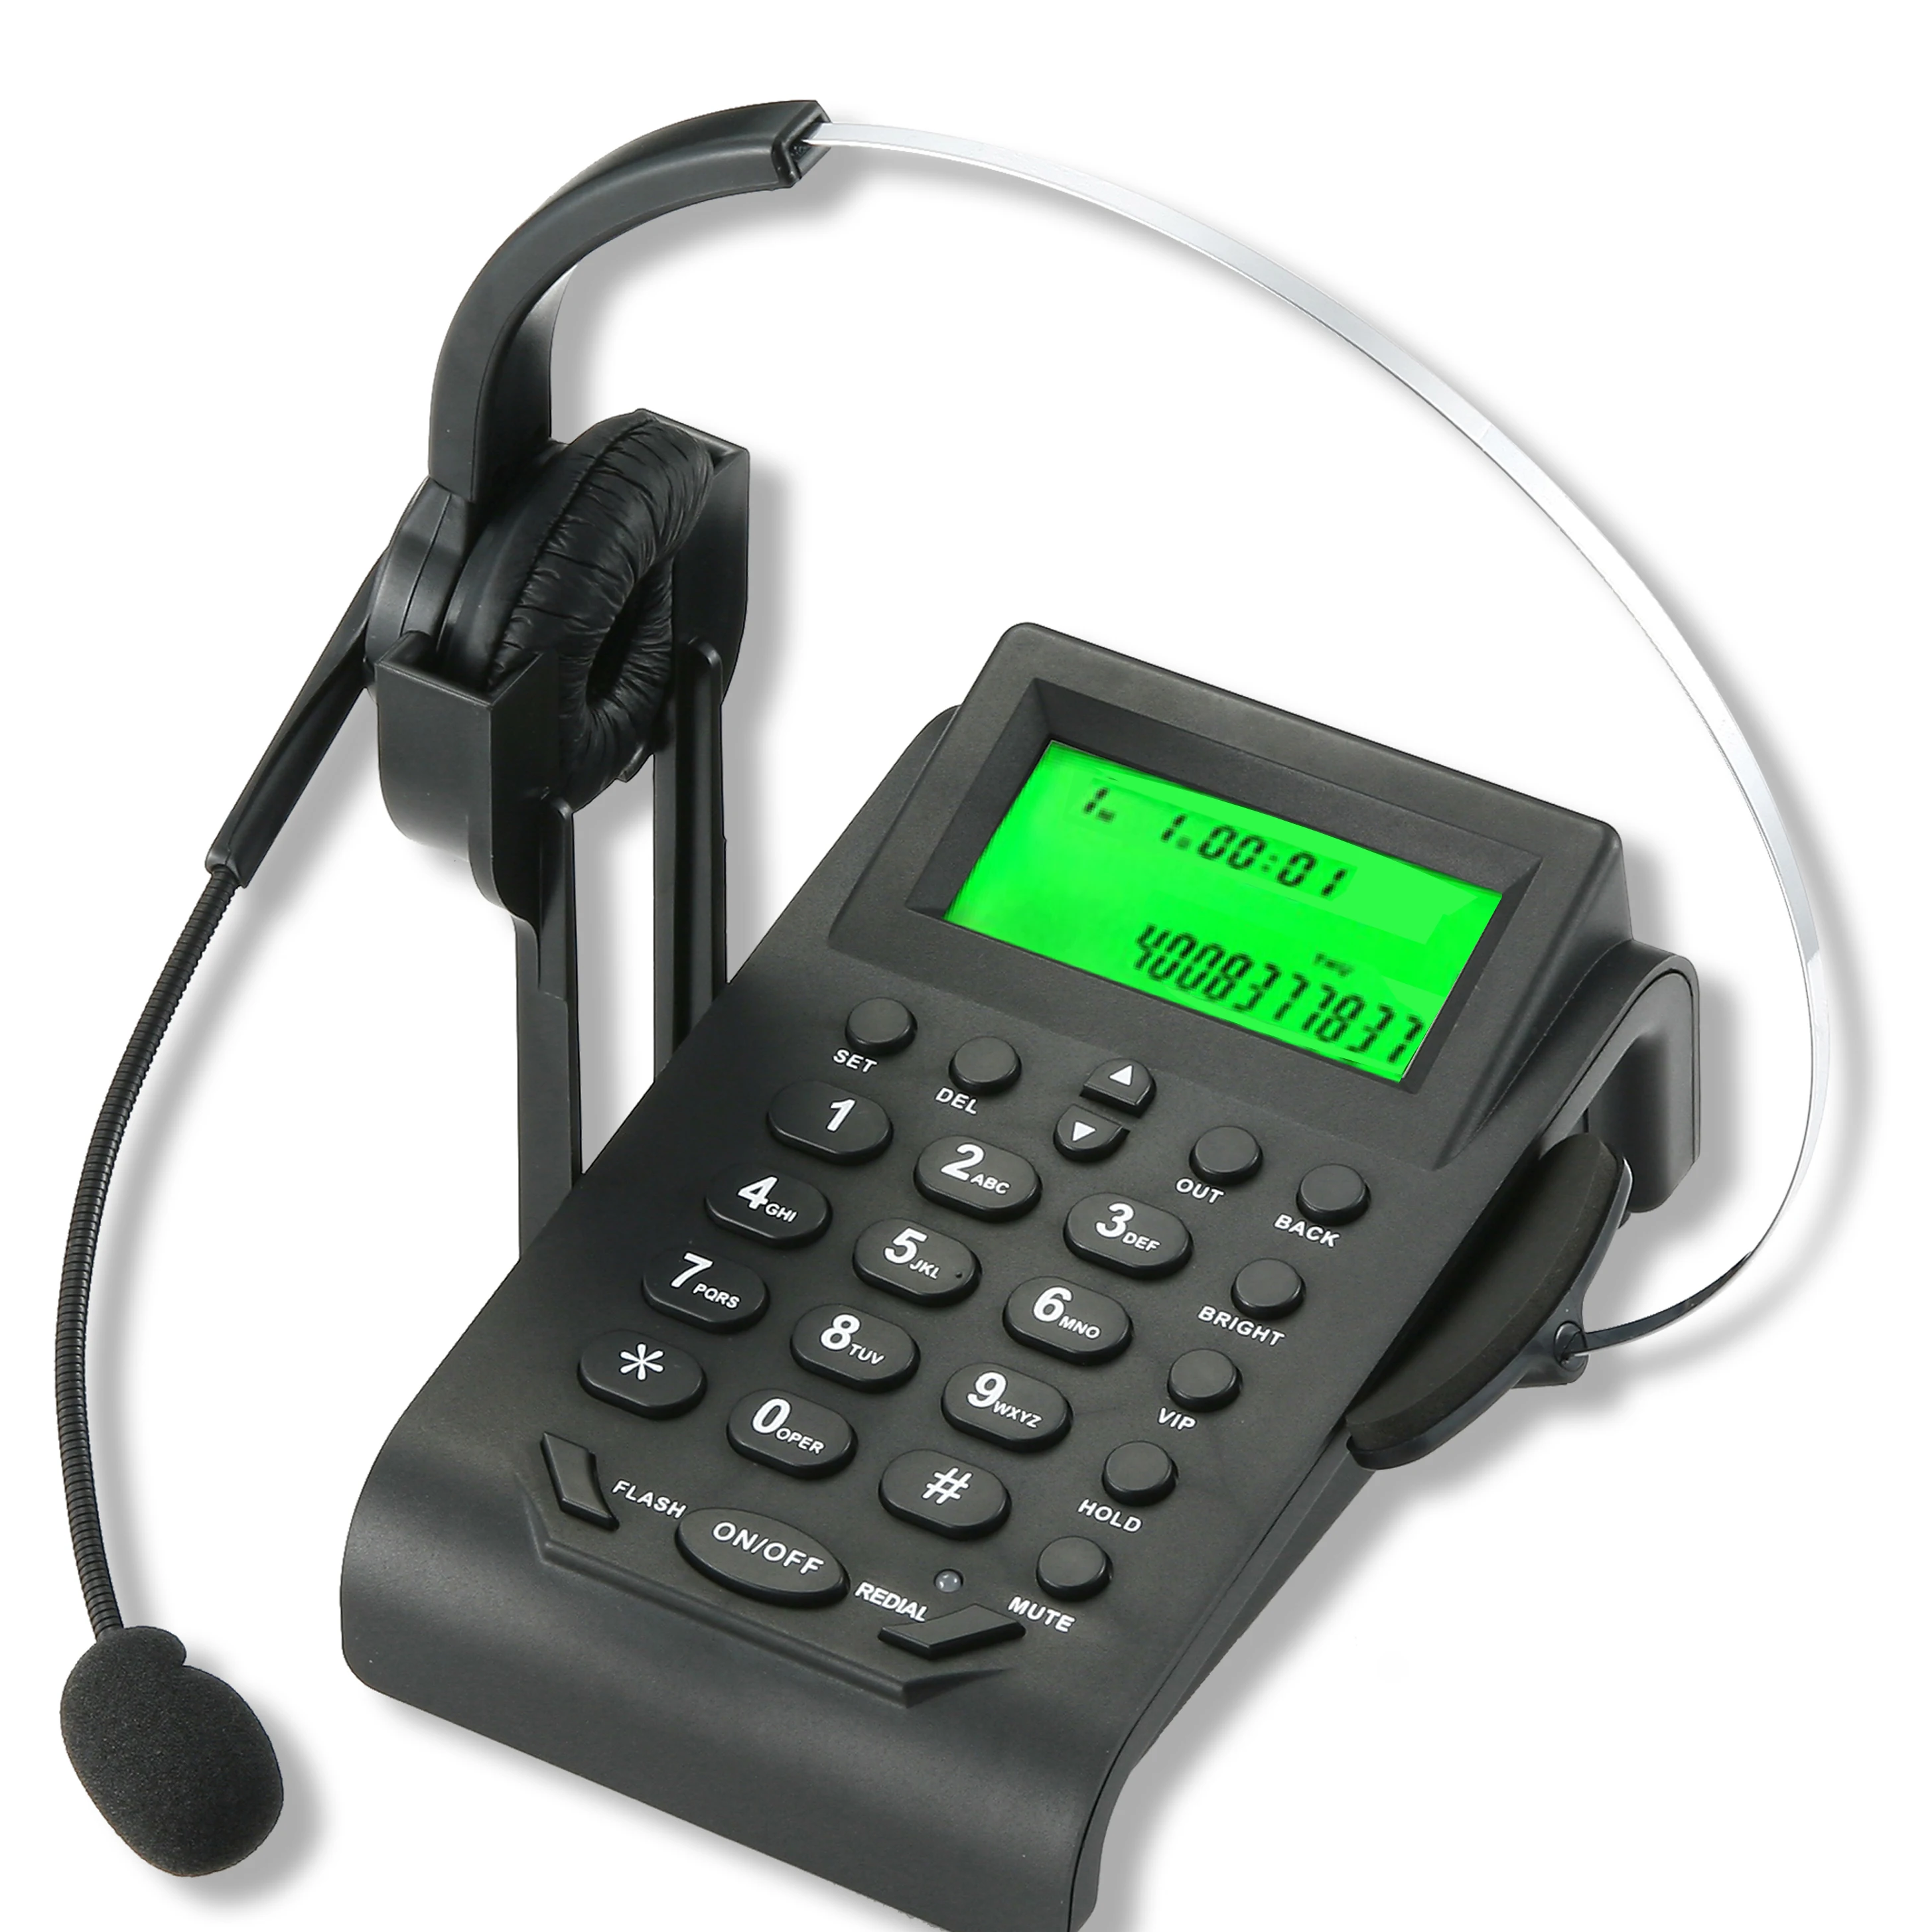 

100pcs Landline Telephone Hands Free Headset Telephone Noise Cancelling Telephone Headset with Mic for Call Center Telemarketing